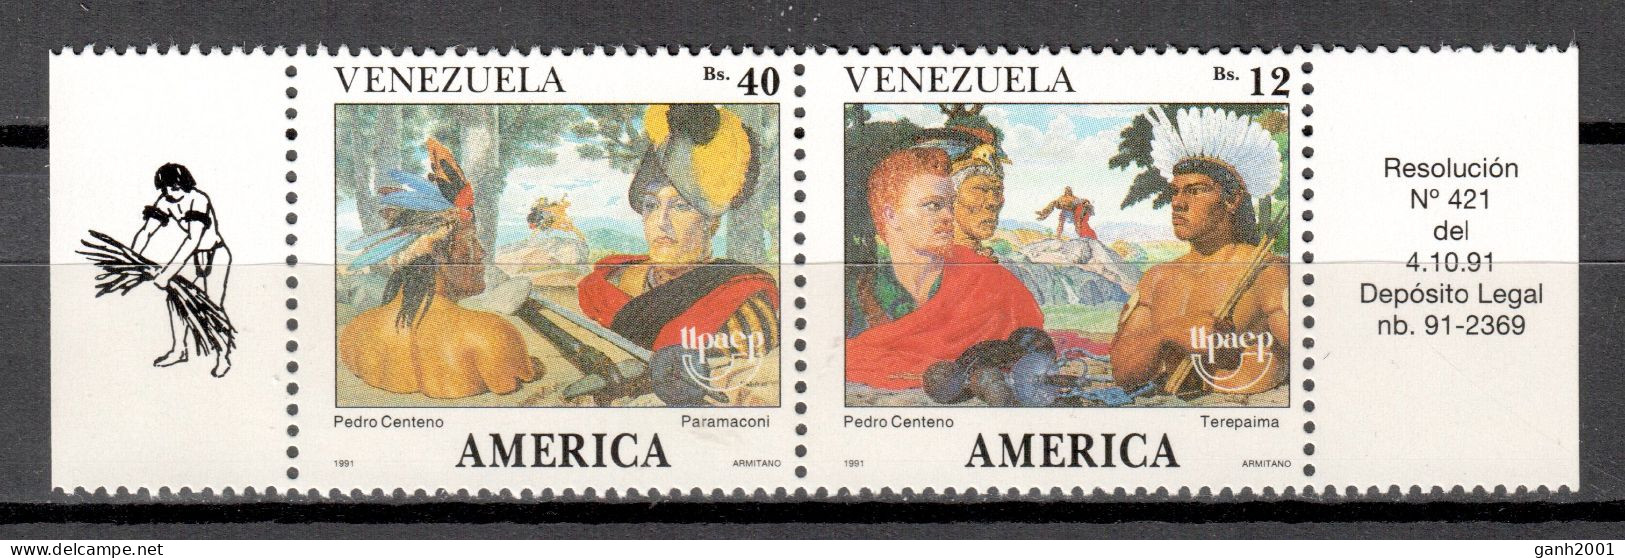 Venezuela 1991 / America UPAEP The World The Conquerors Found MNH / Em31  27-5 - Emisiones Comunes